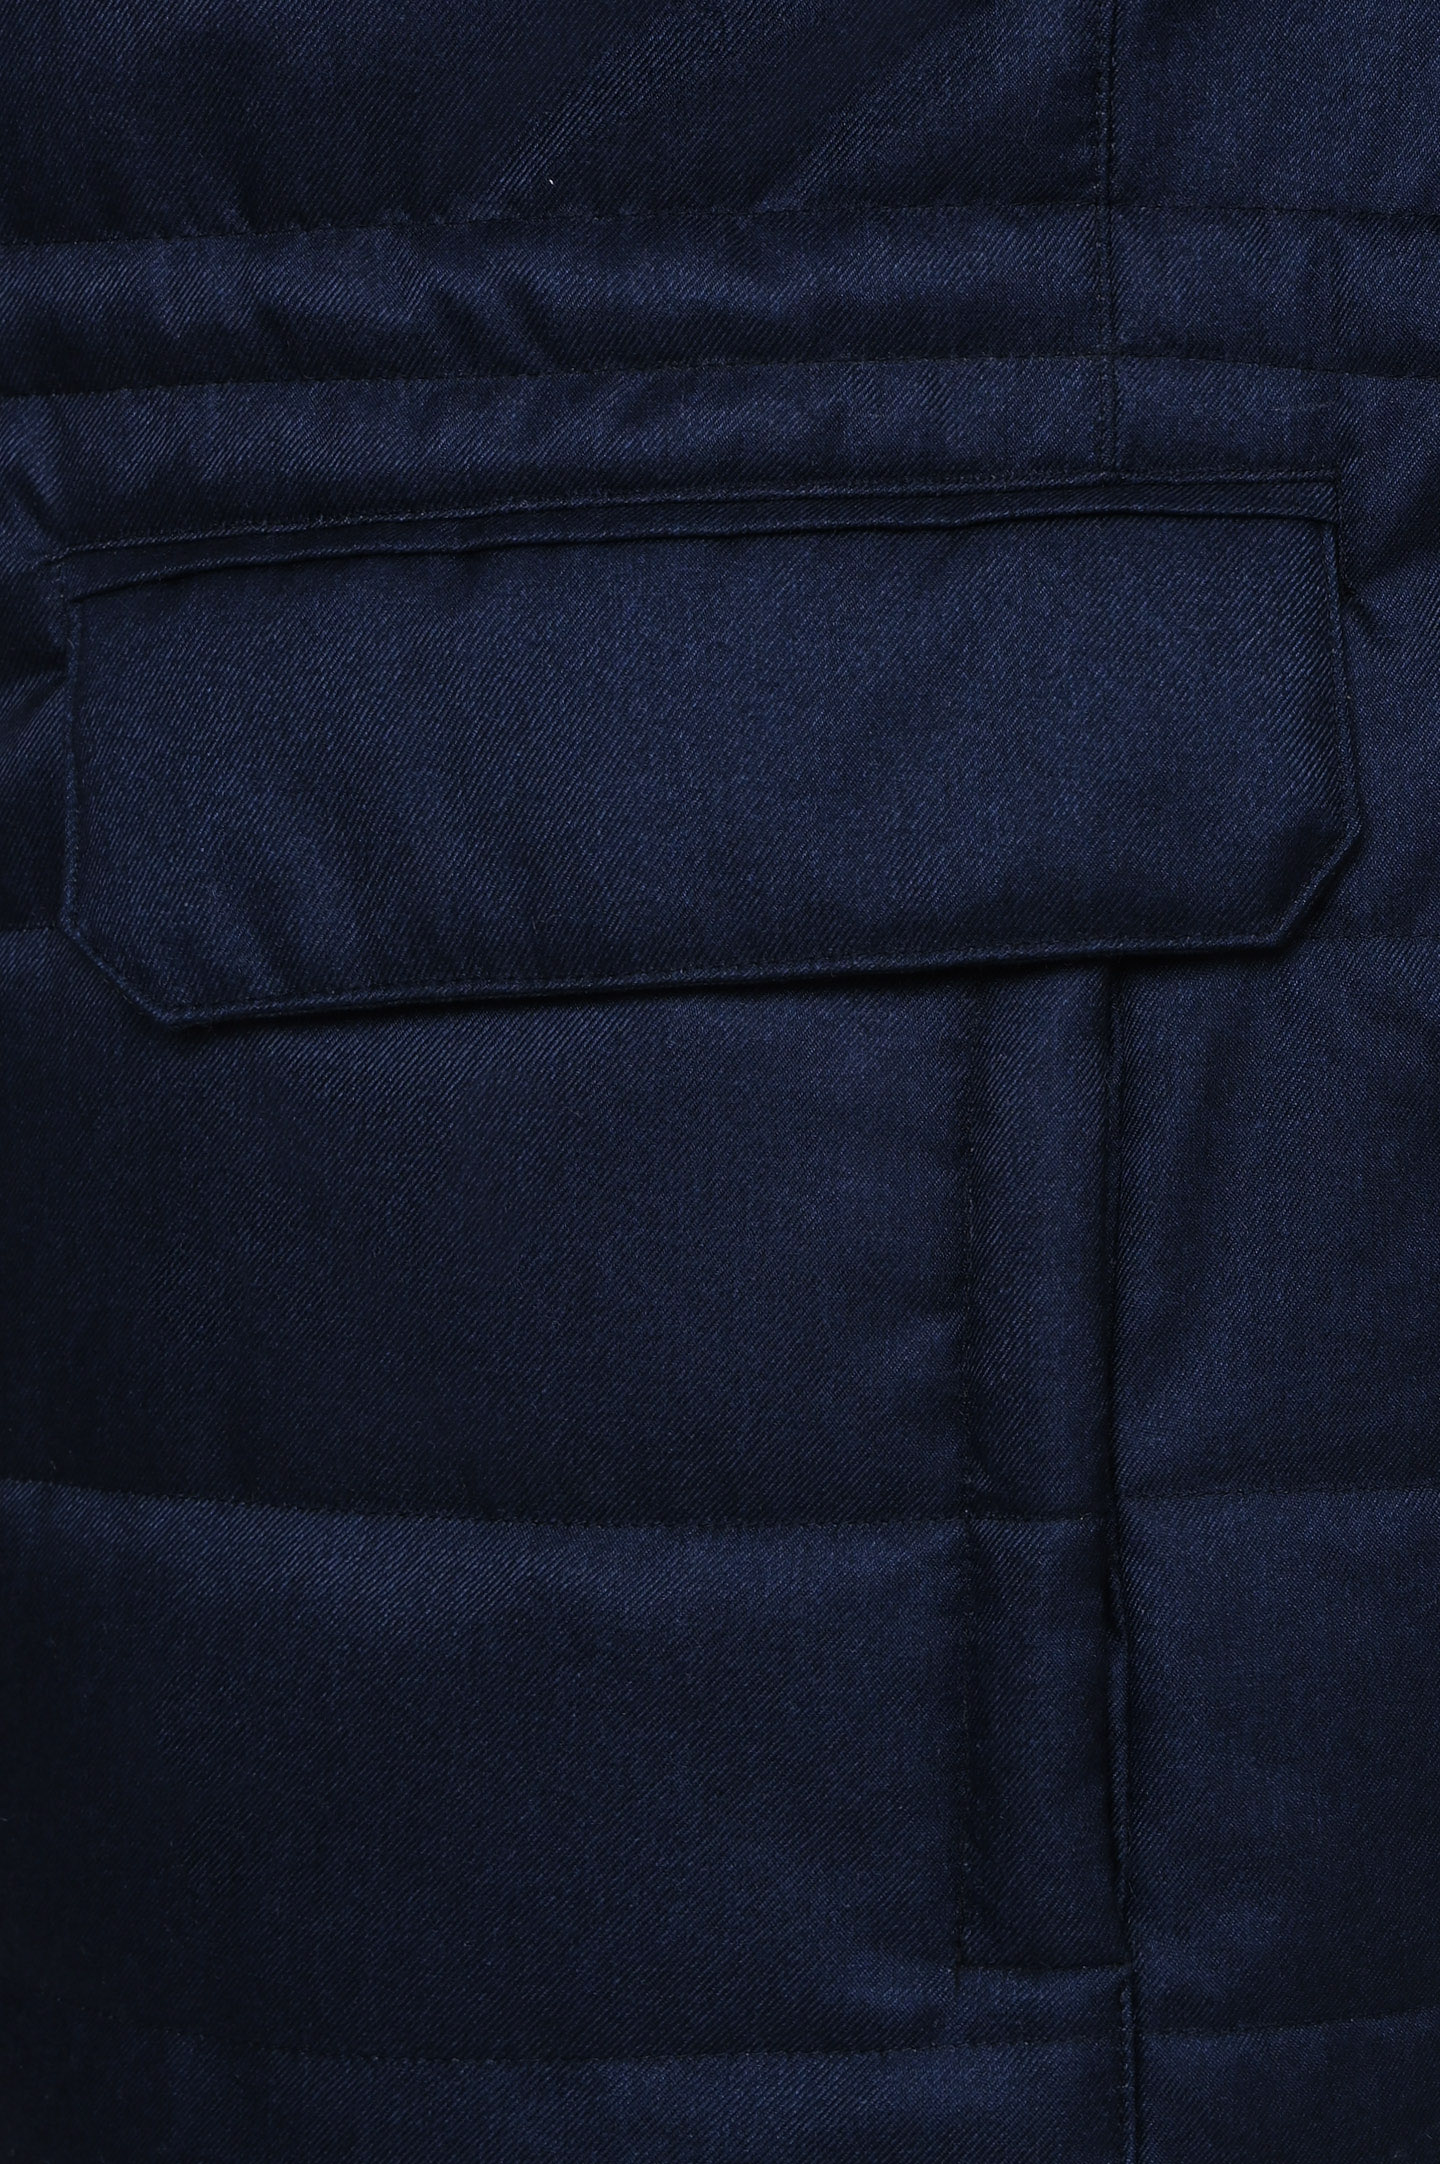 Куртка CANALI SG02732 O20353, цвет: Синий, Мужской